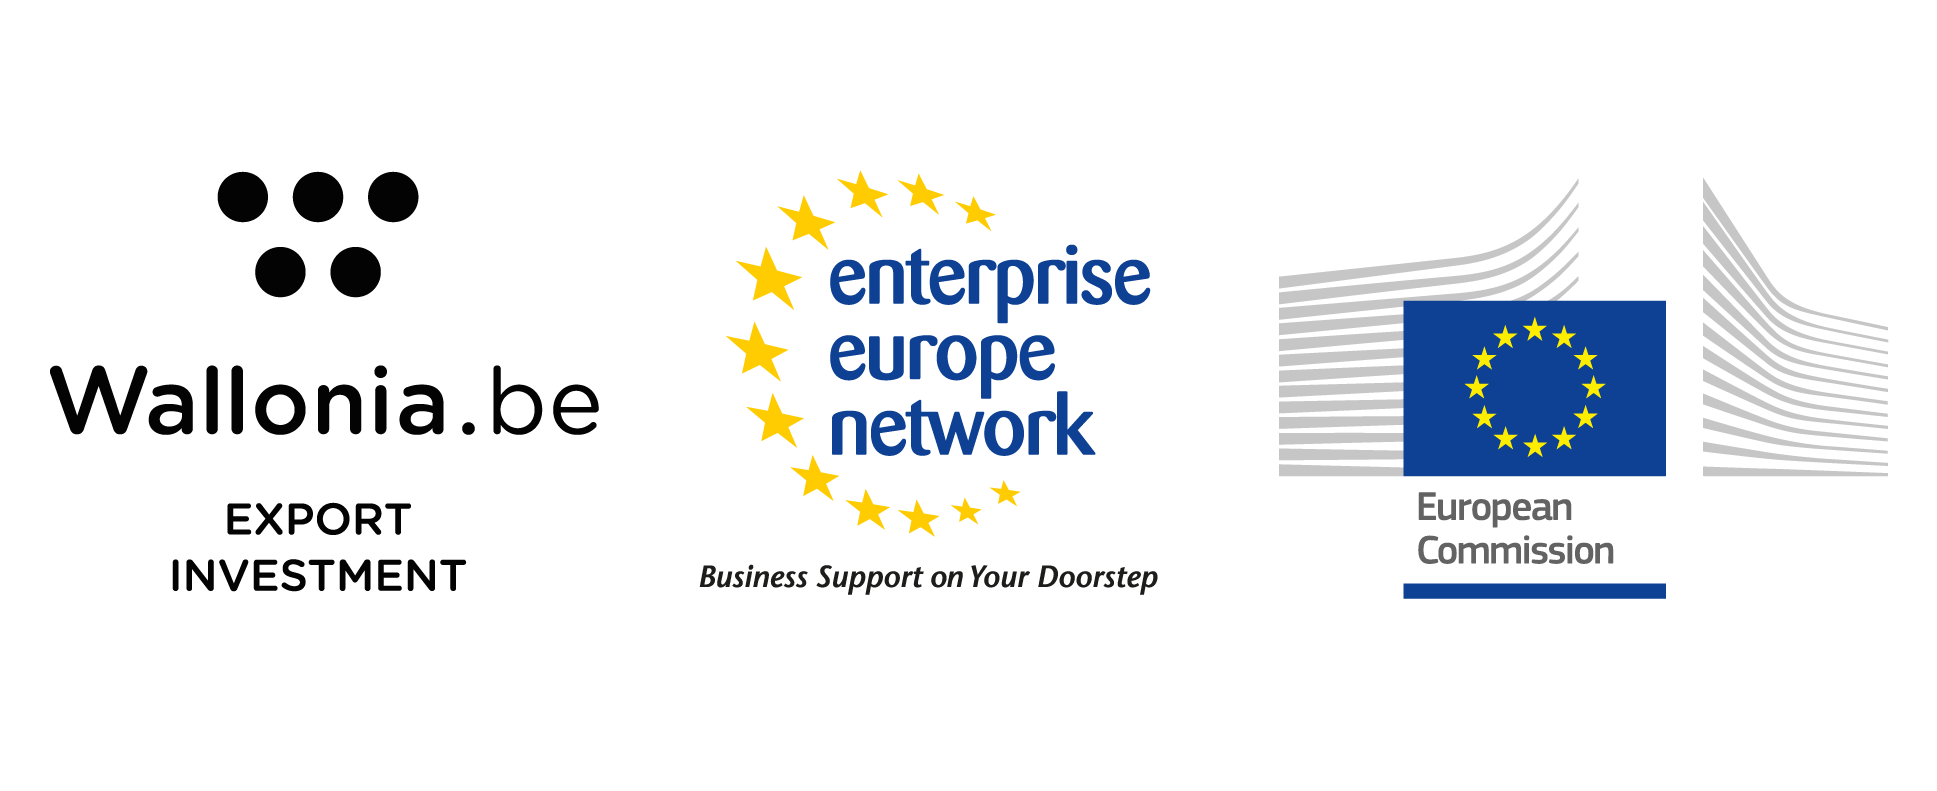 Entreprise Europe Network